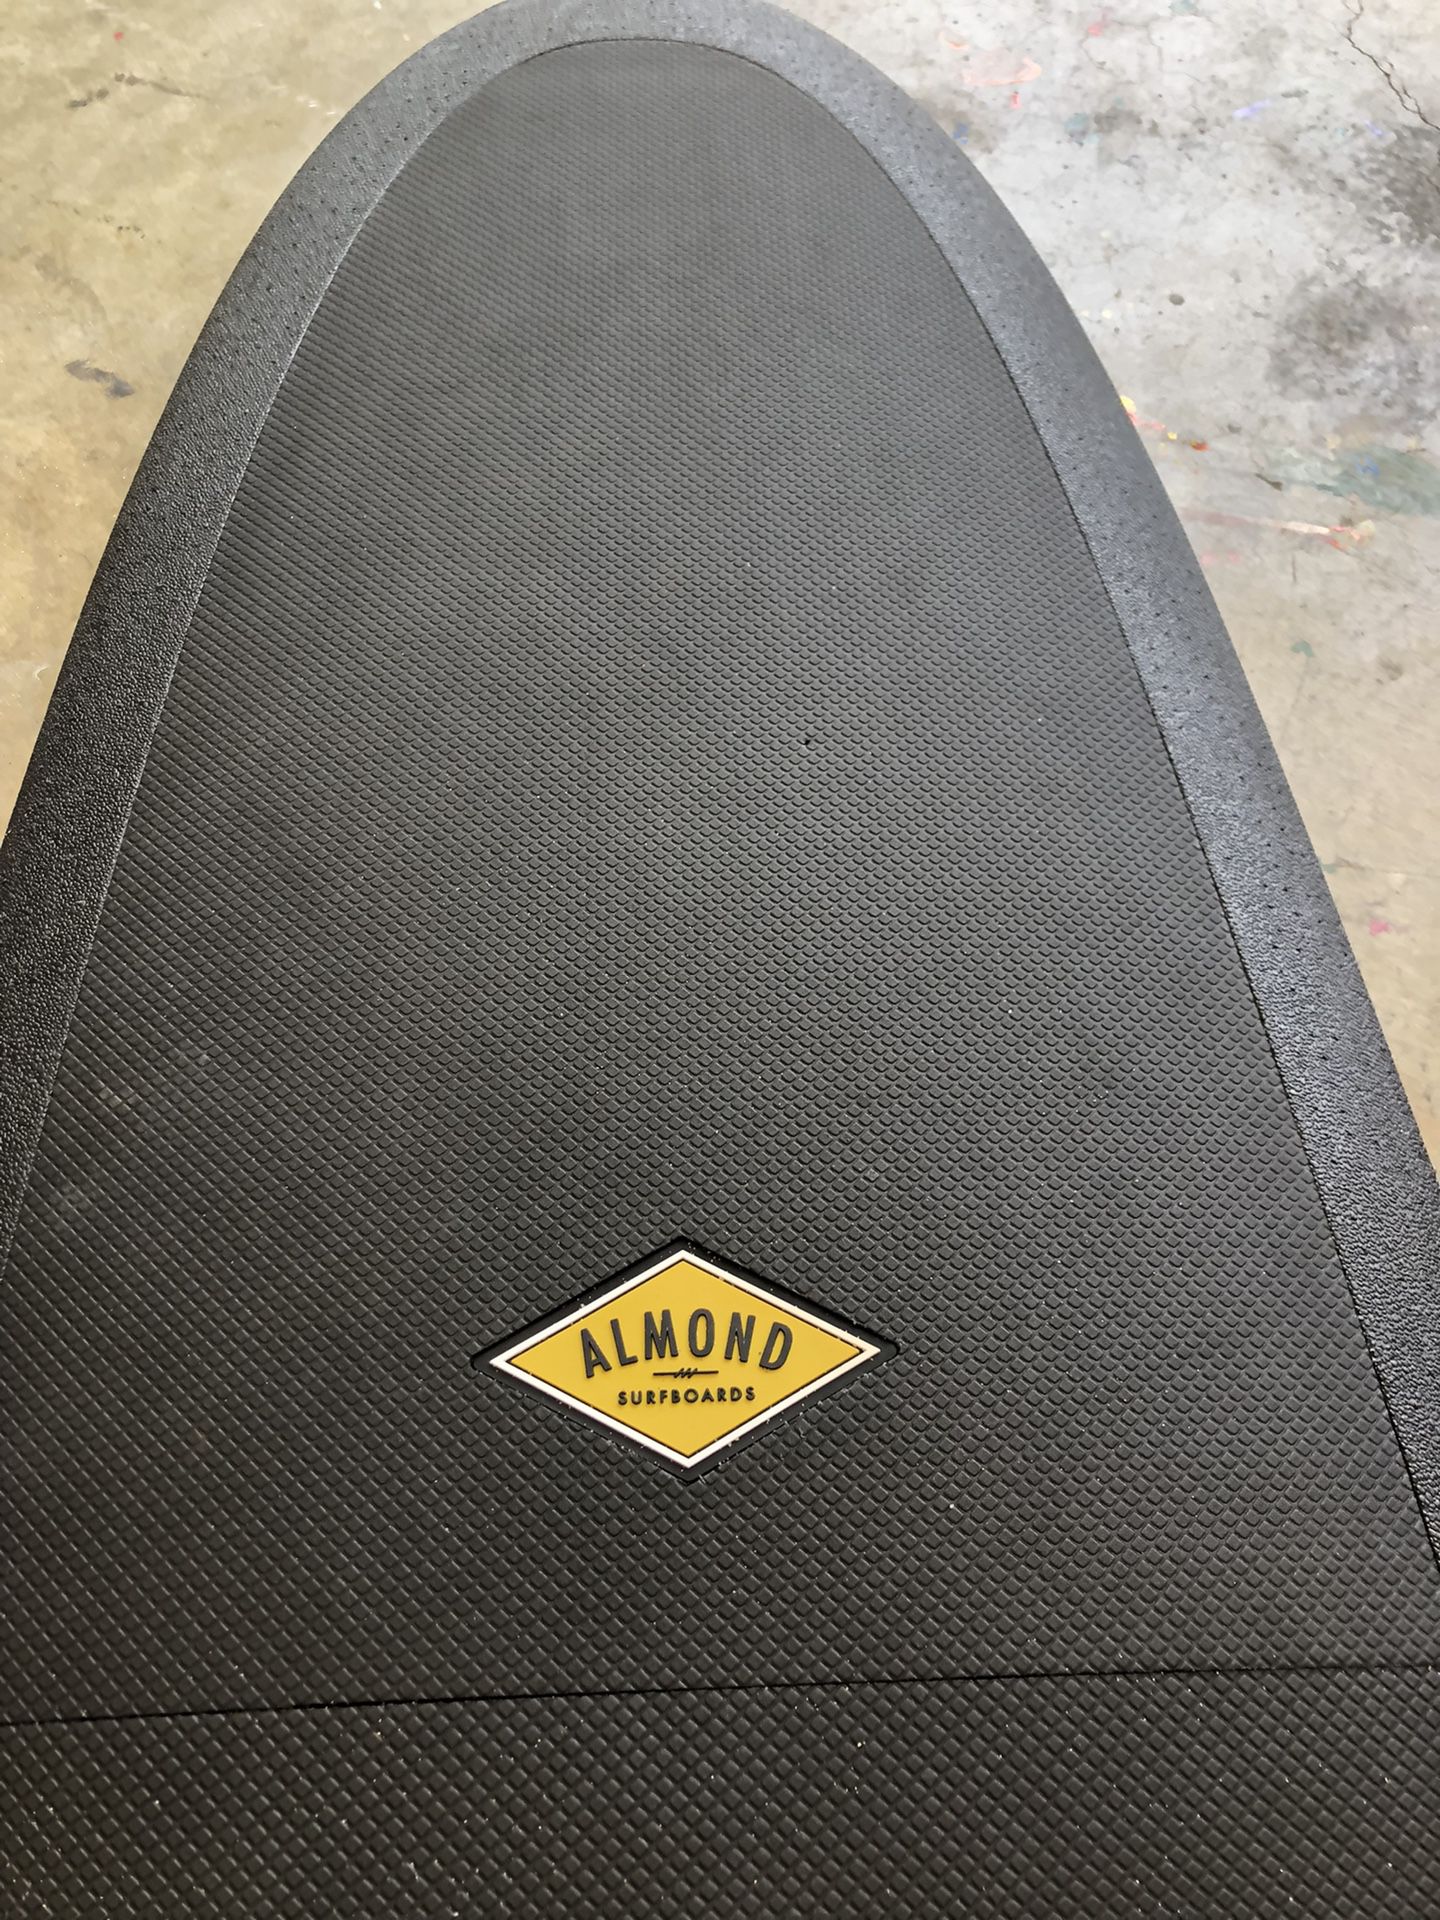 Brand New Almond Surfboard 